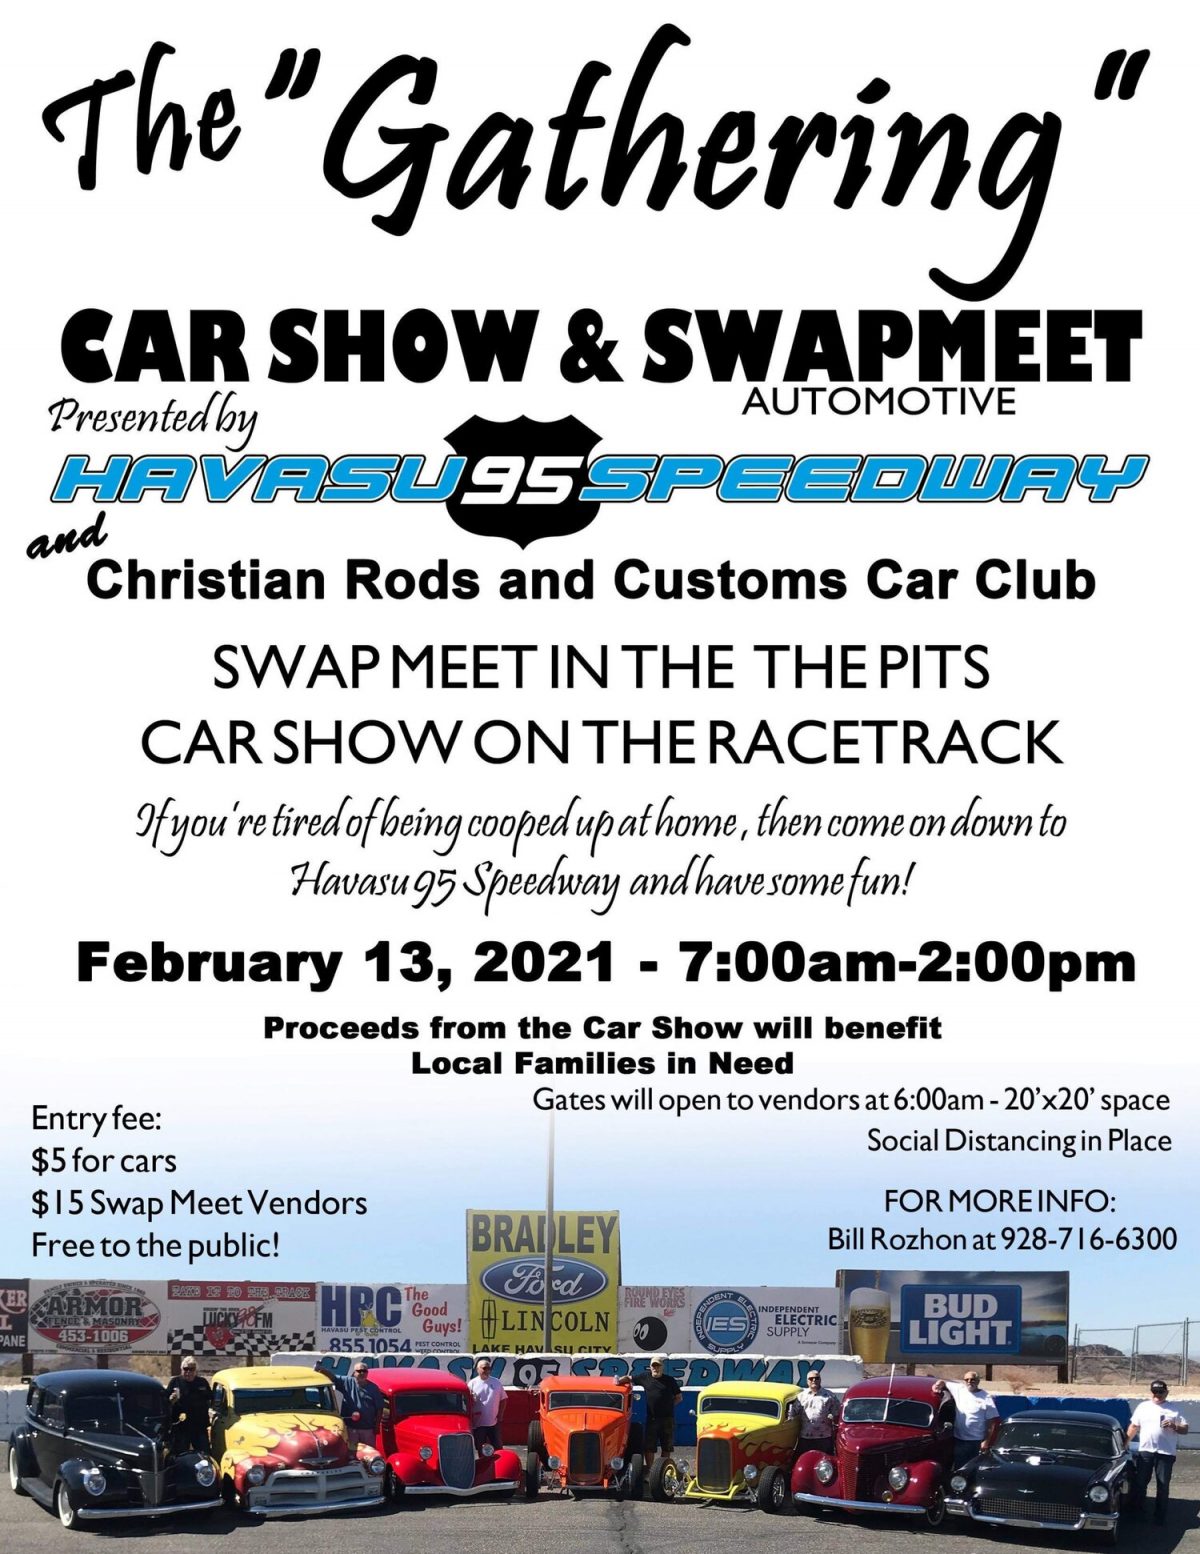 The Gathering Car Show & Swap Meet